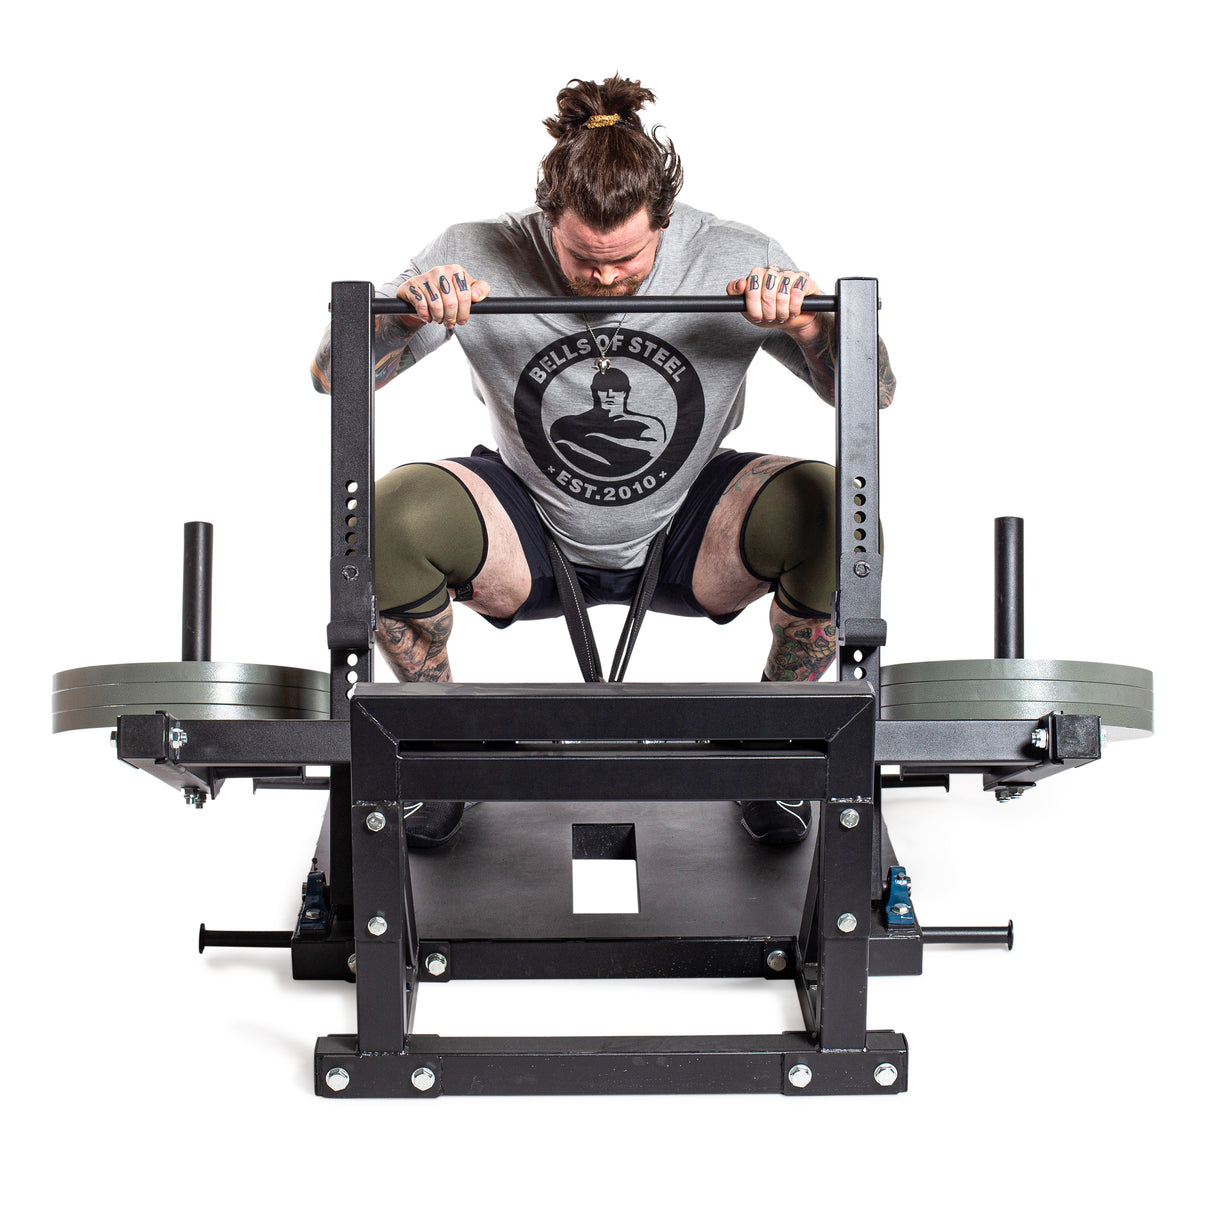 Male athlete using squat machine using Machined iron Olympic weight plates